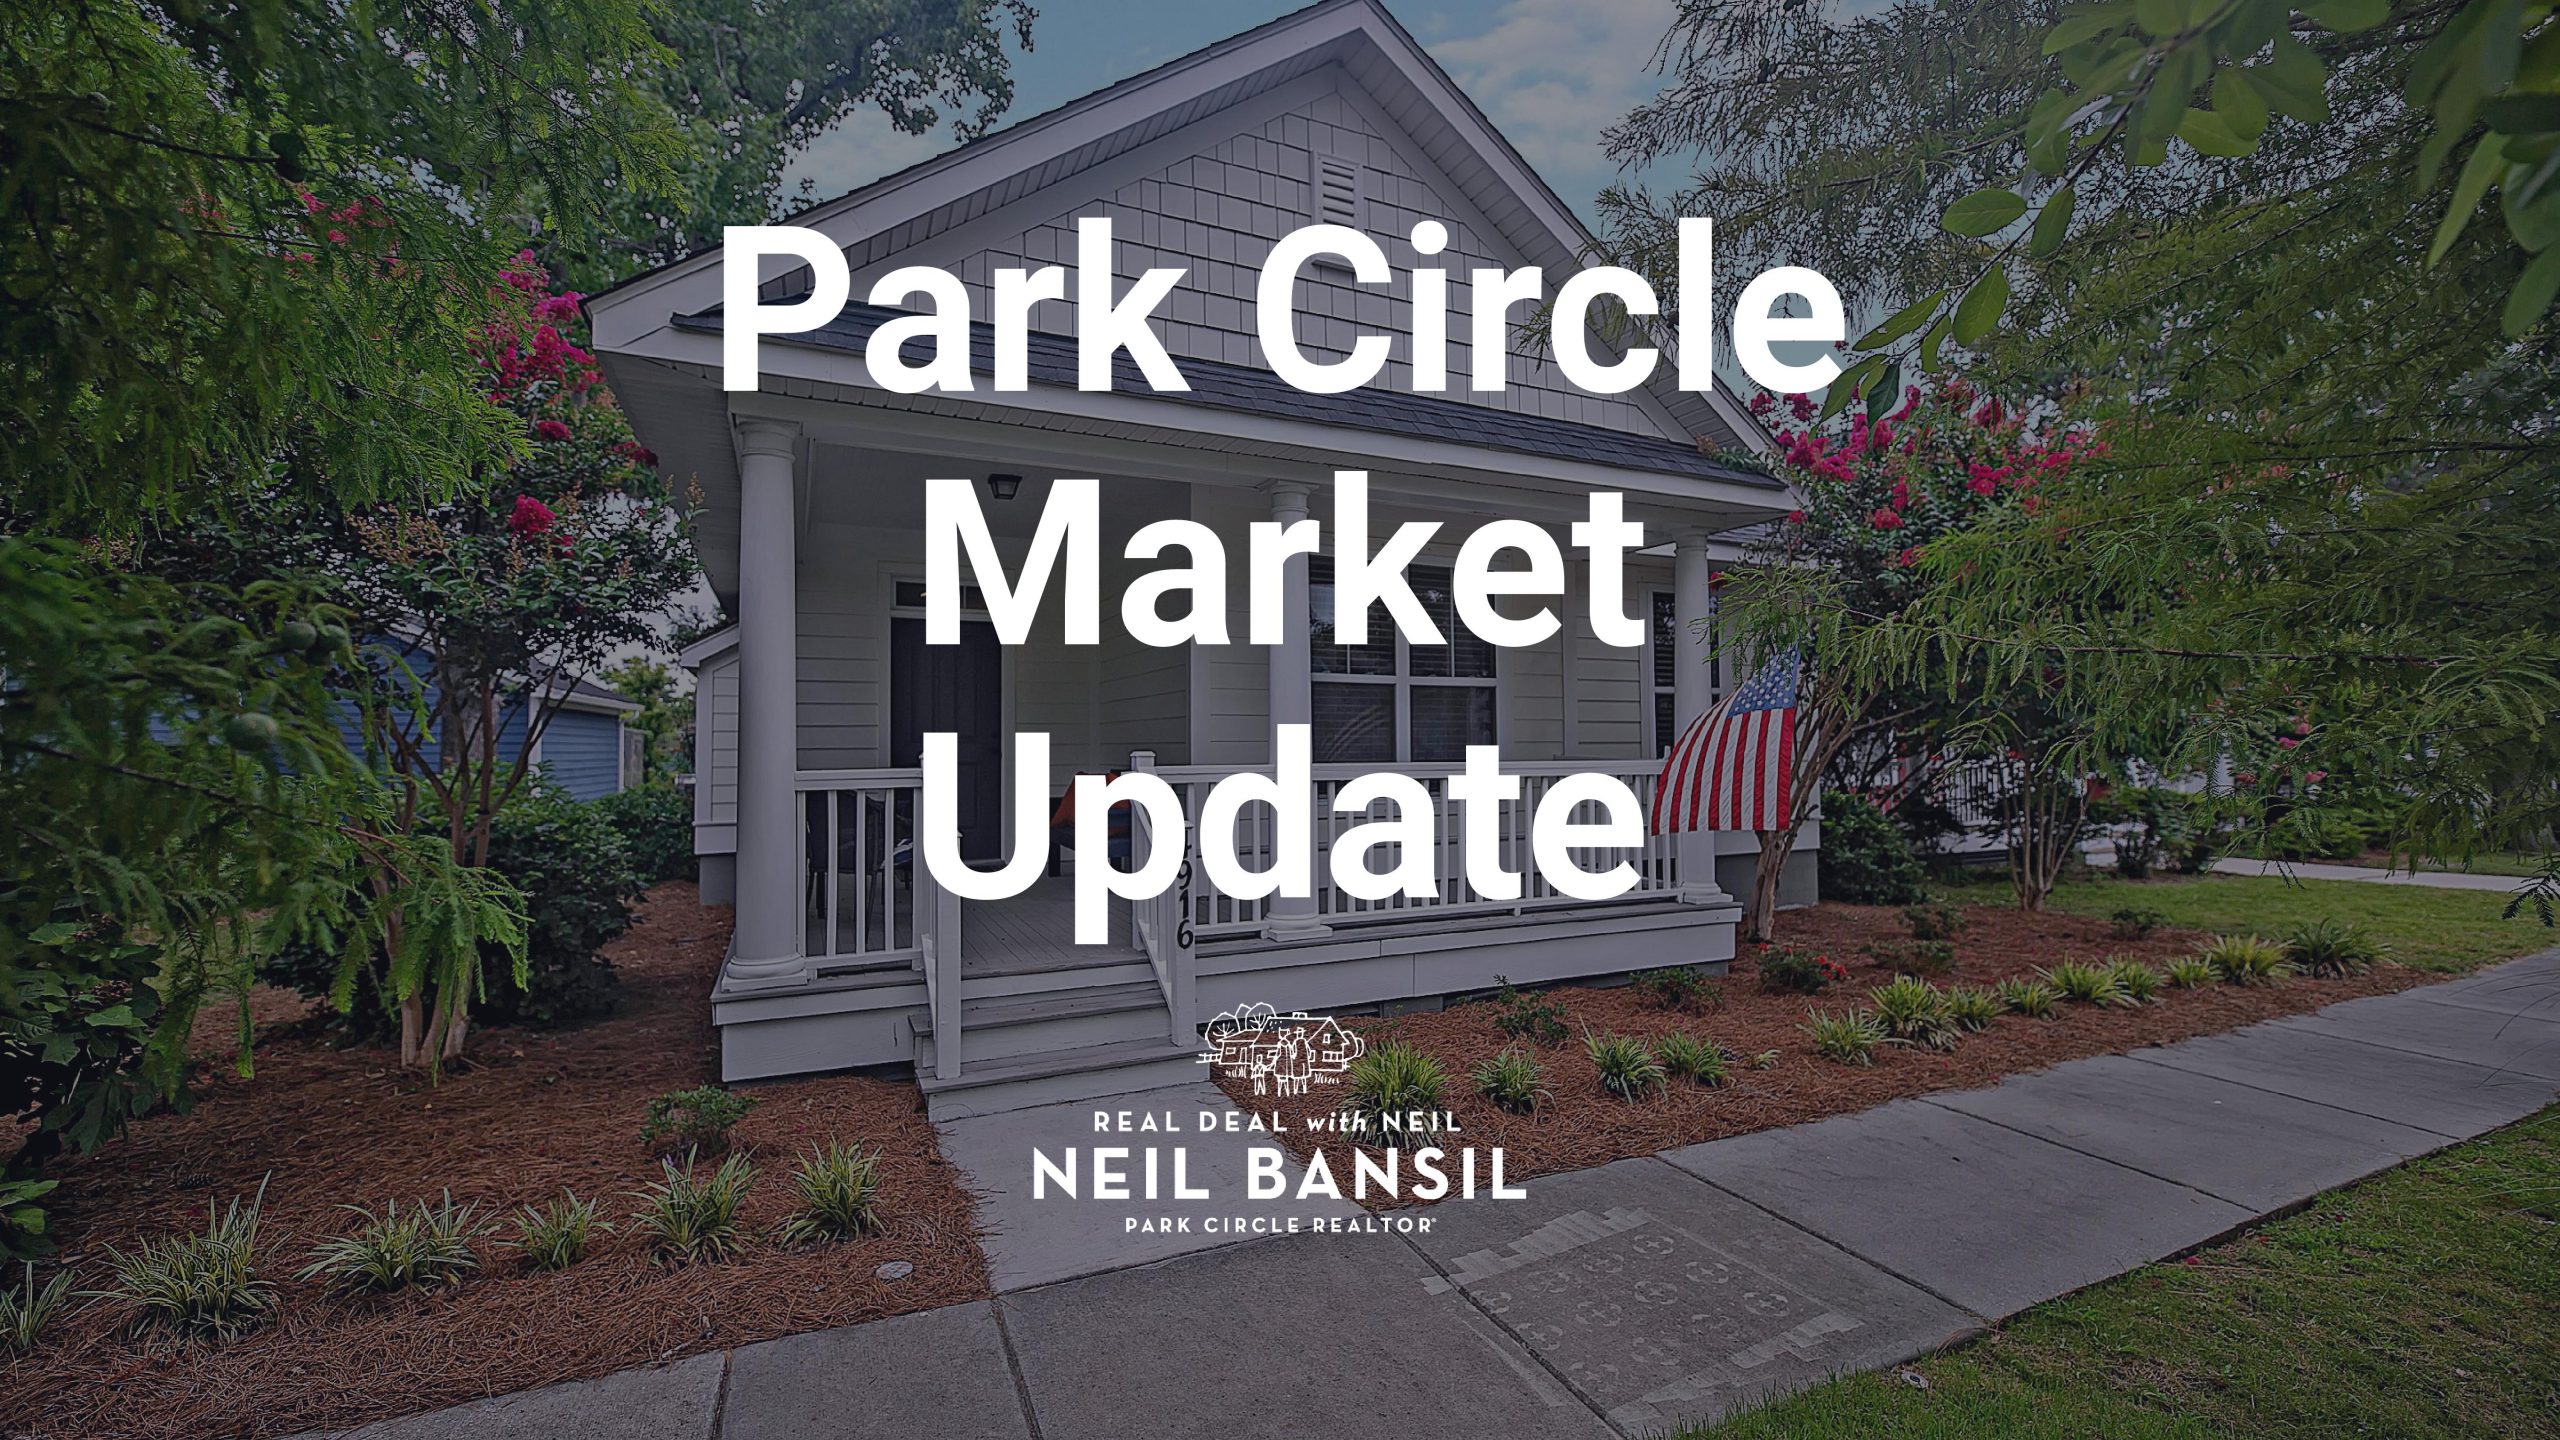 Park Circle Market Update - July 2021